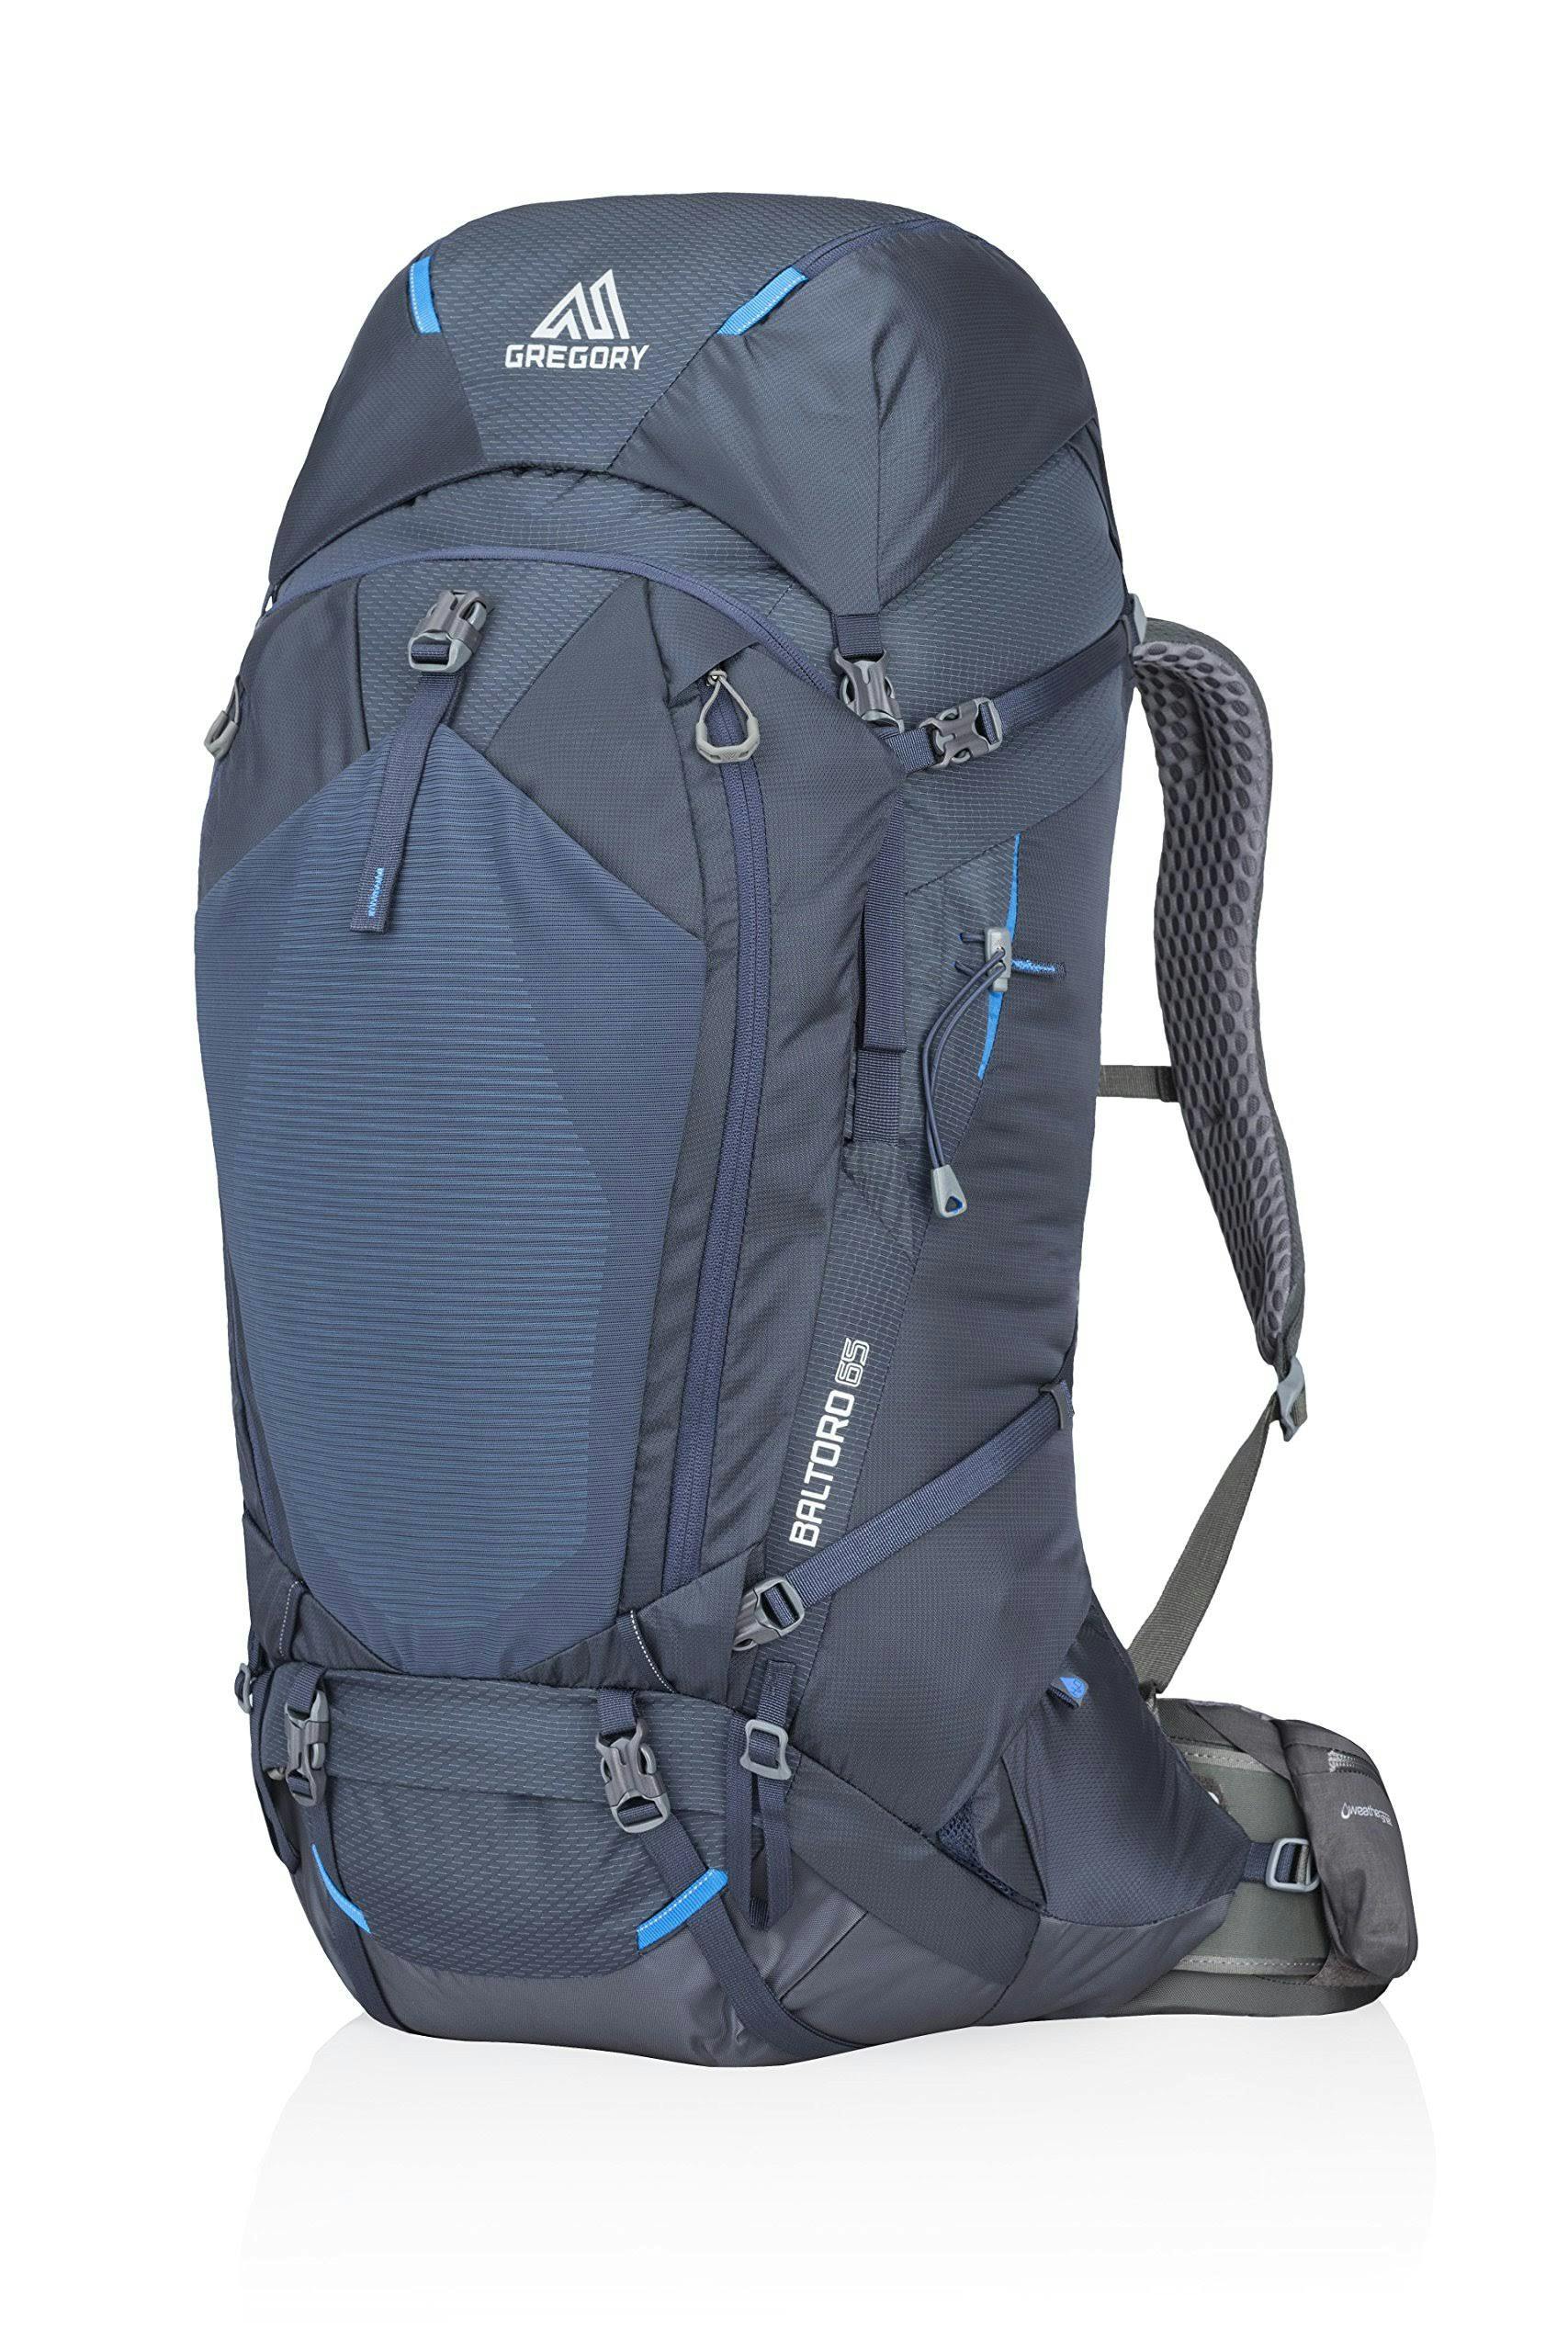 Gregory - Baltoro 65 Backpack - Large - Dusk Blue